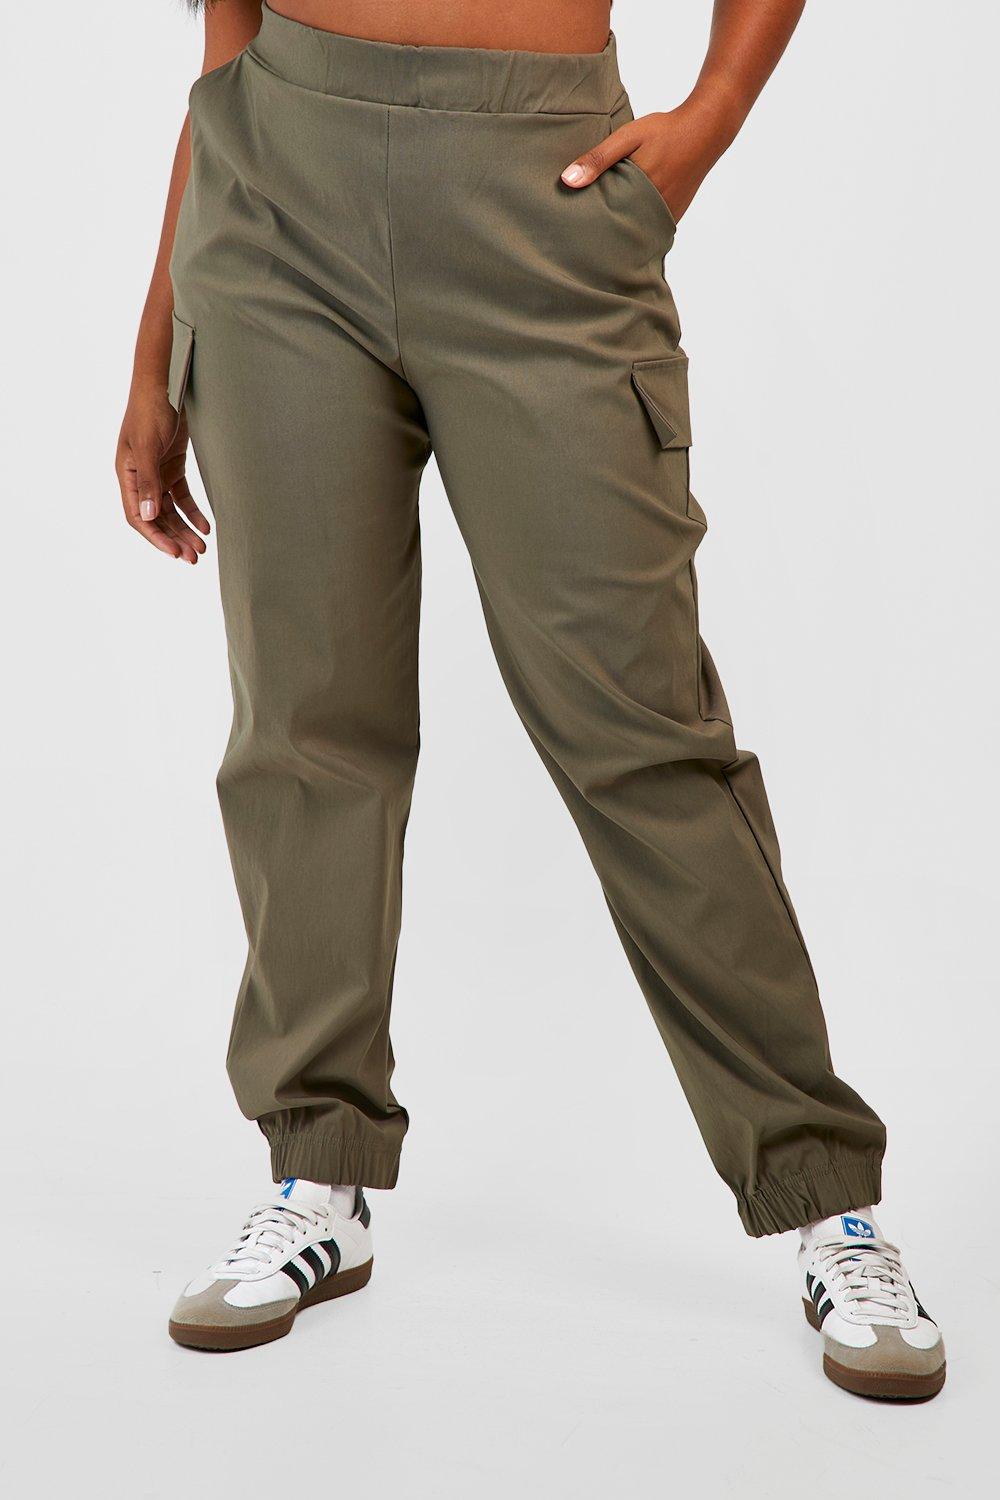 https://media.boohoo.com/i/boohoo/gzz61409_khaki_xl_2/female-khaki-plus-super-stretch-fitted-cargo-pants